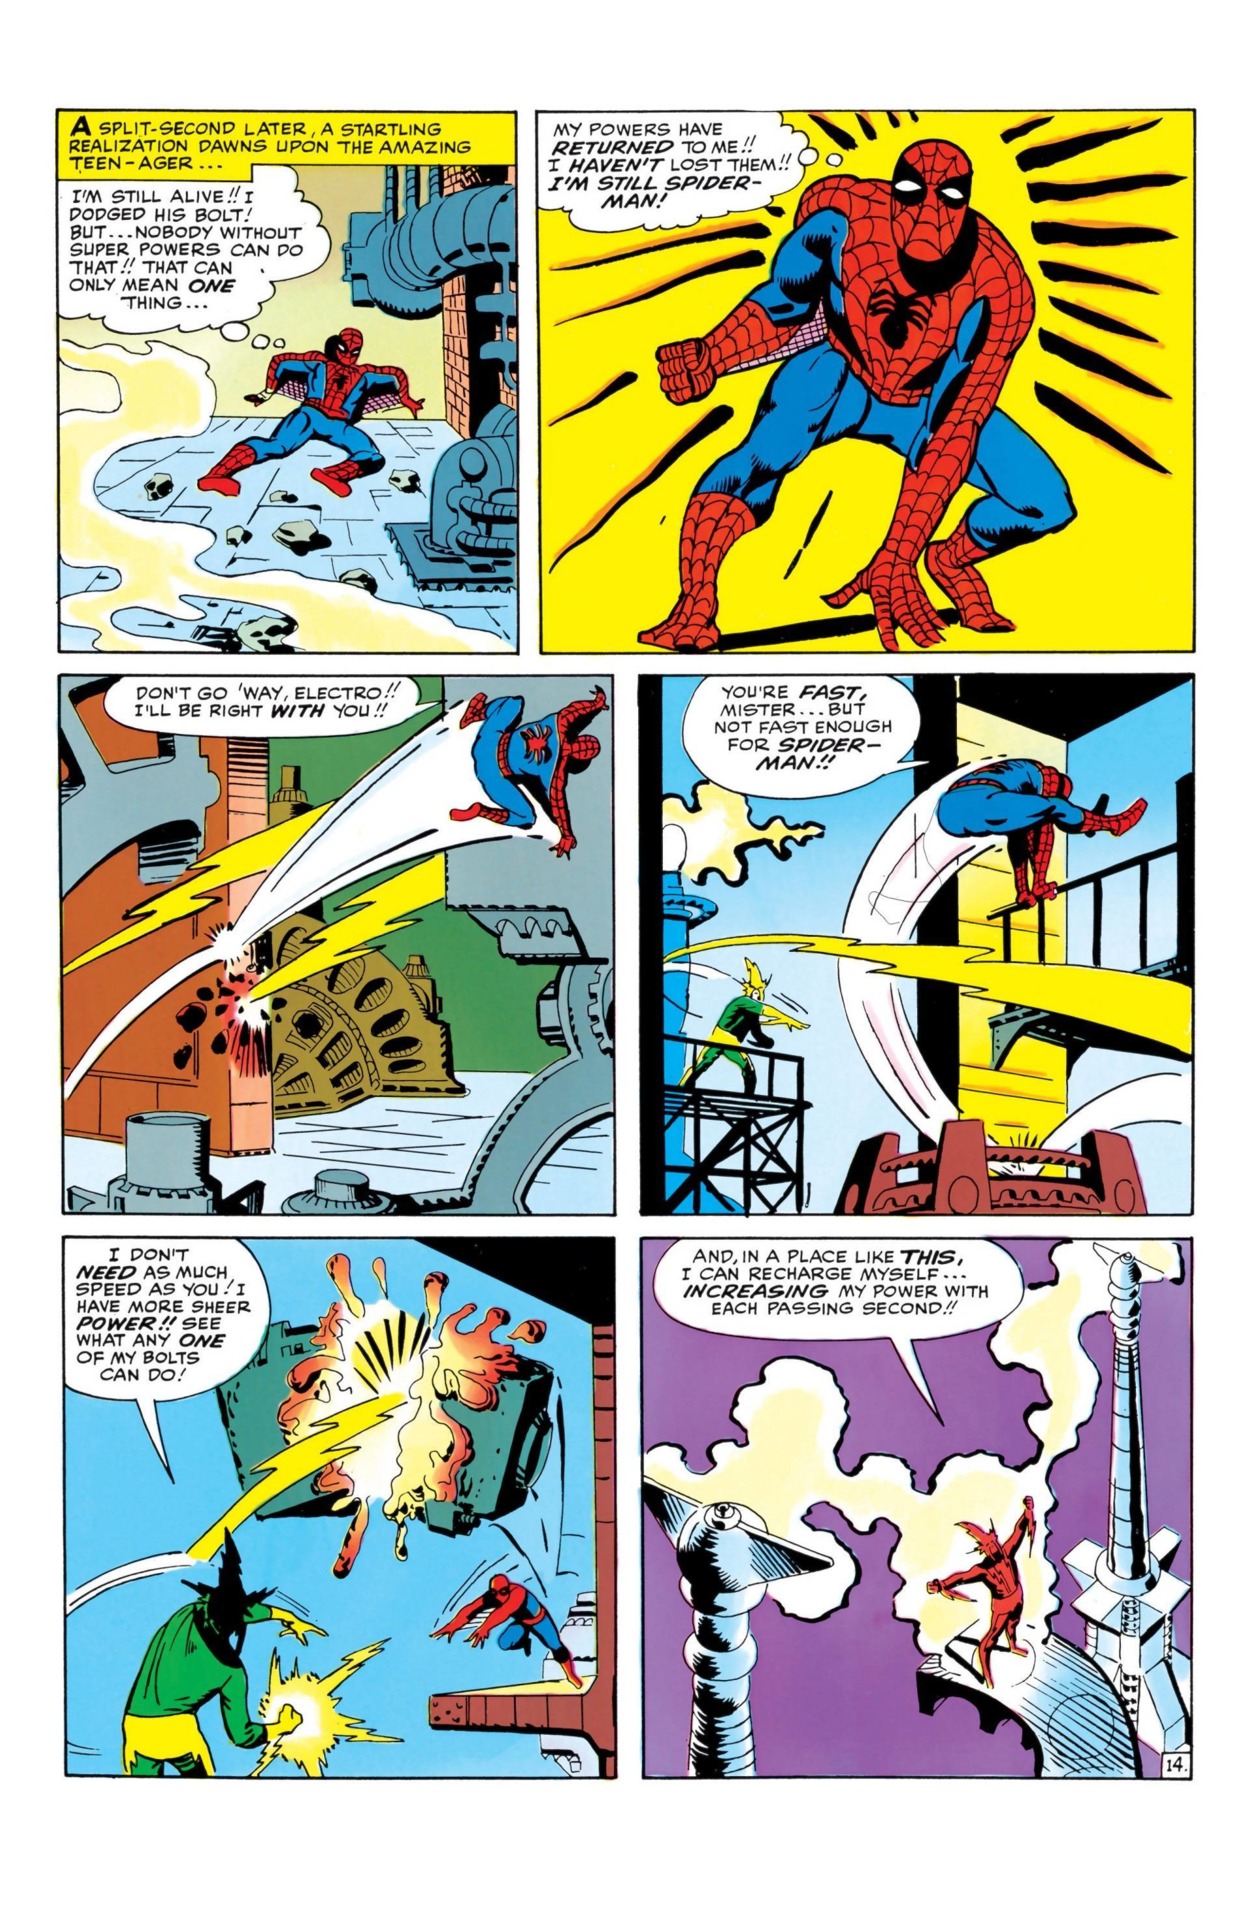 (The Amazing Spider-Man Vol. 1 Annual #1)